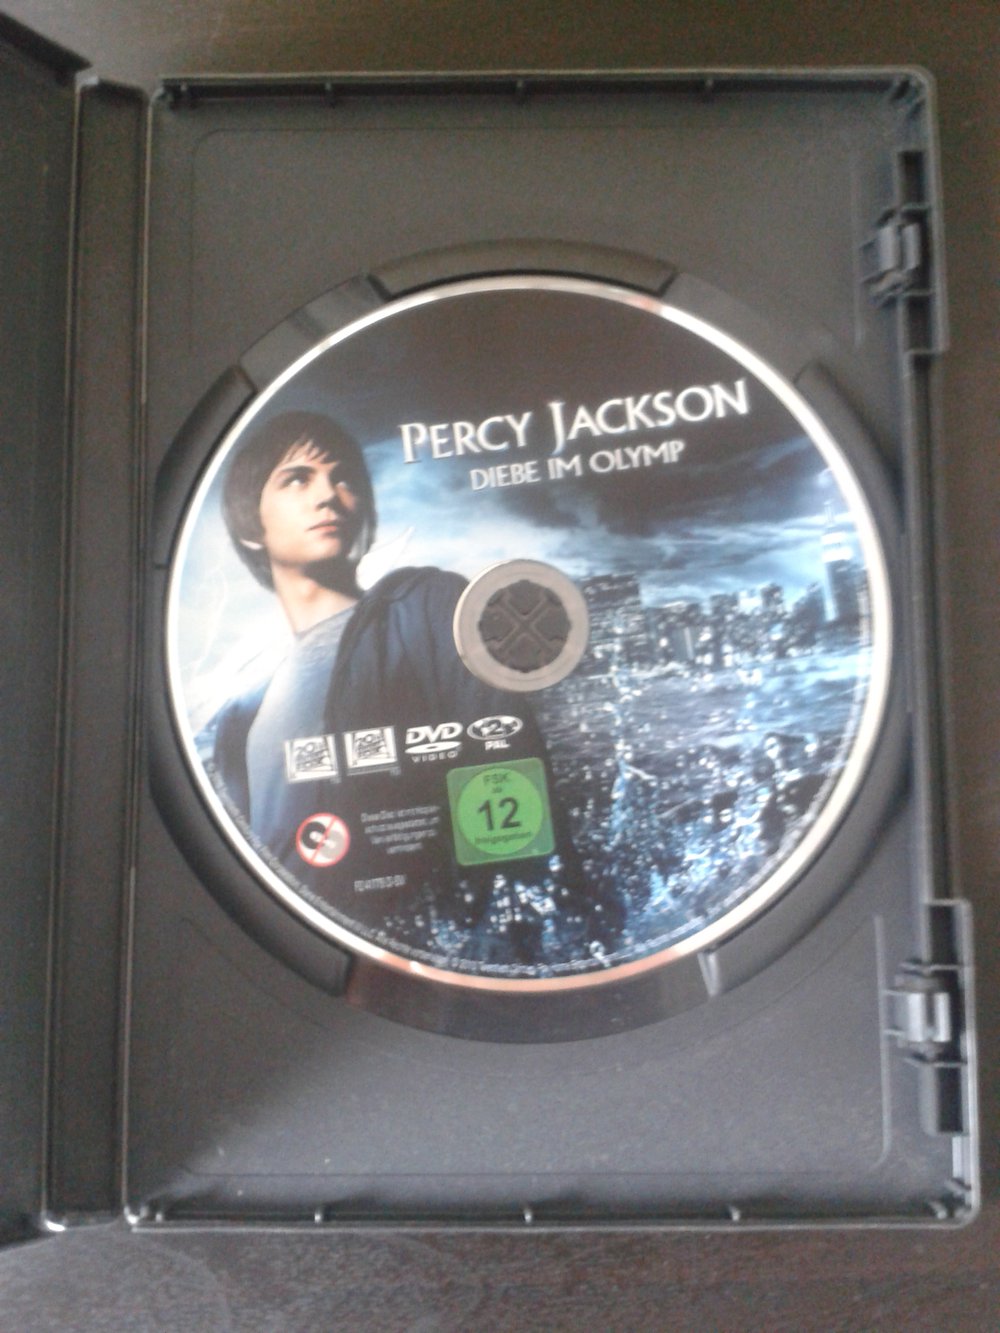 Percy Jackson Diebe im Olymp DVD